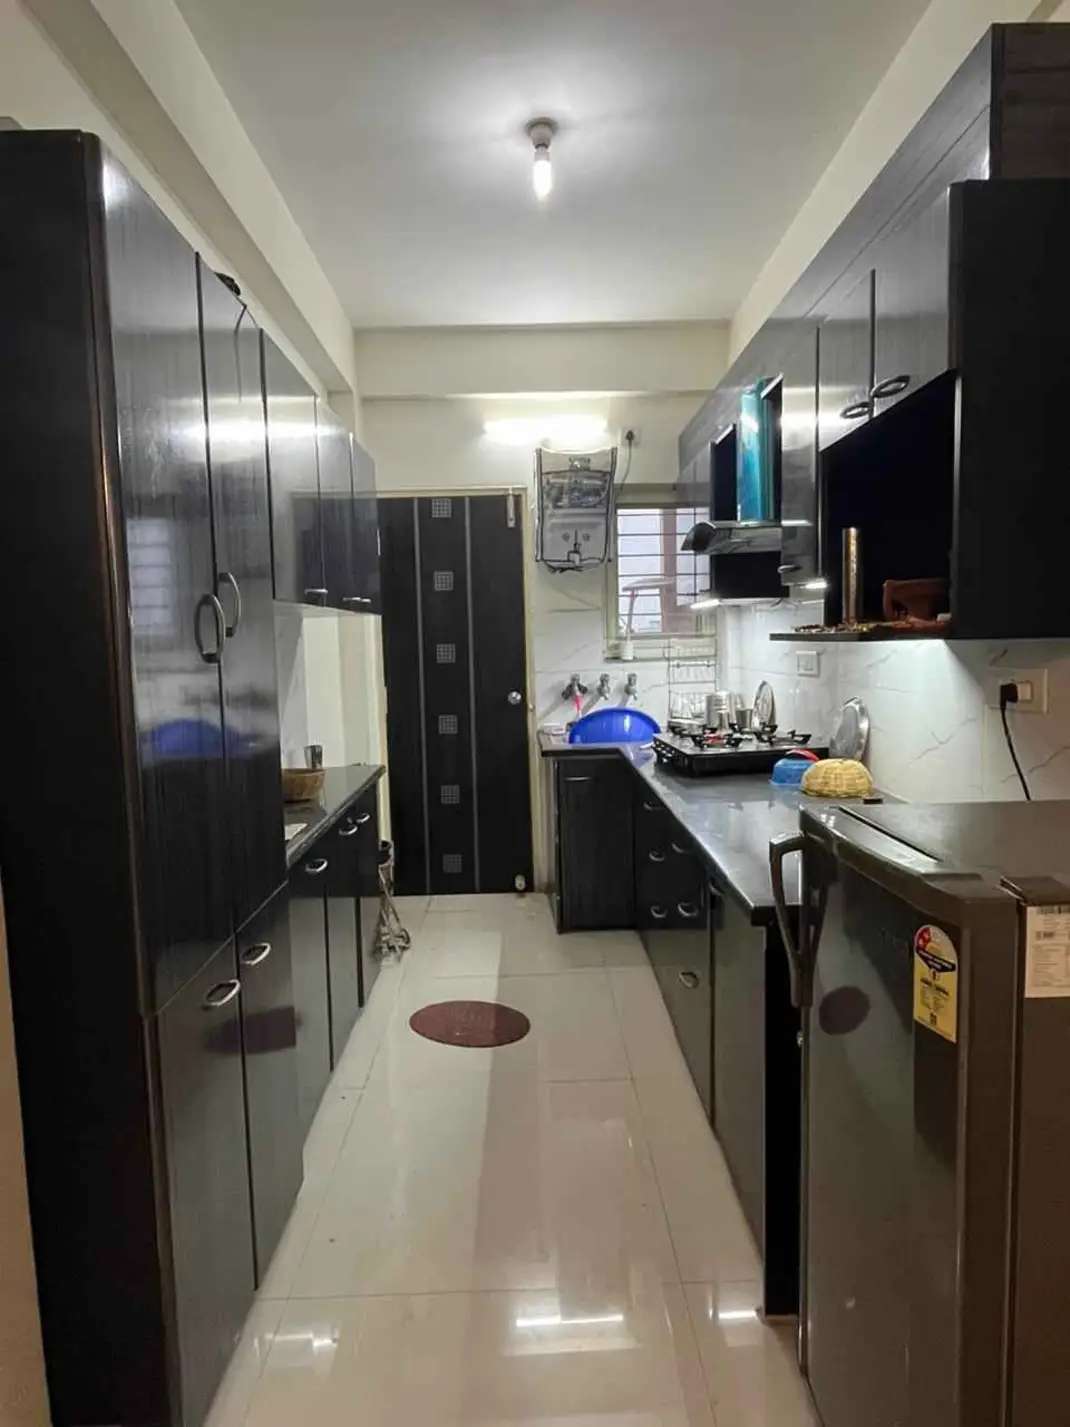 2 Bed/ 2 Bath Rent Apartment/ Flat; 1,200 sq. ft. carpet area, Furnished for rent @Hoshangabad road bhopal